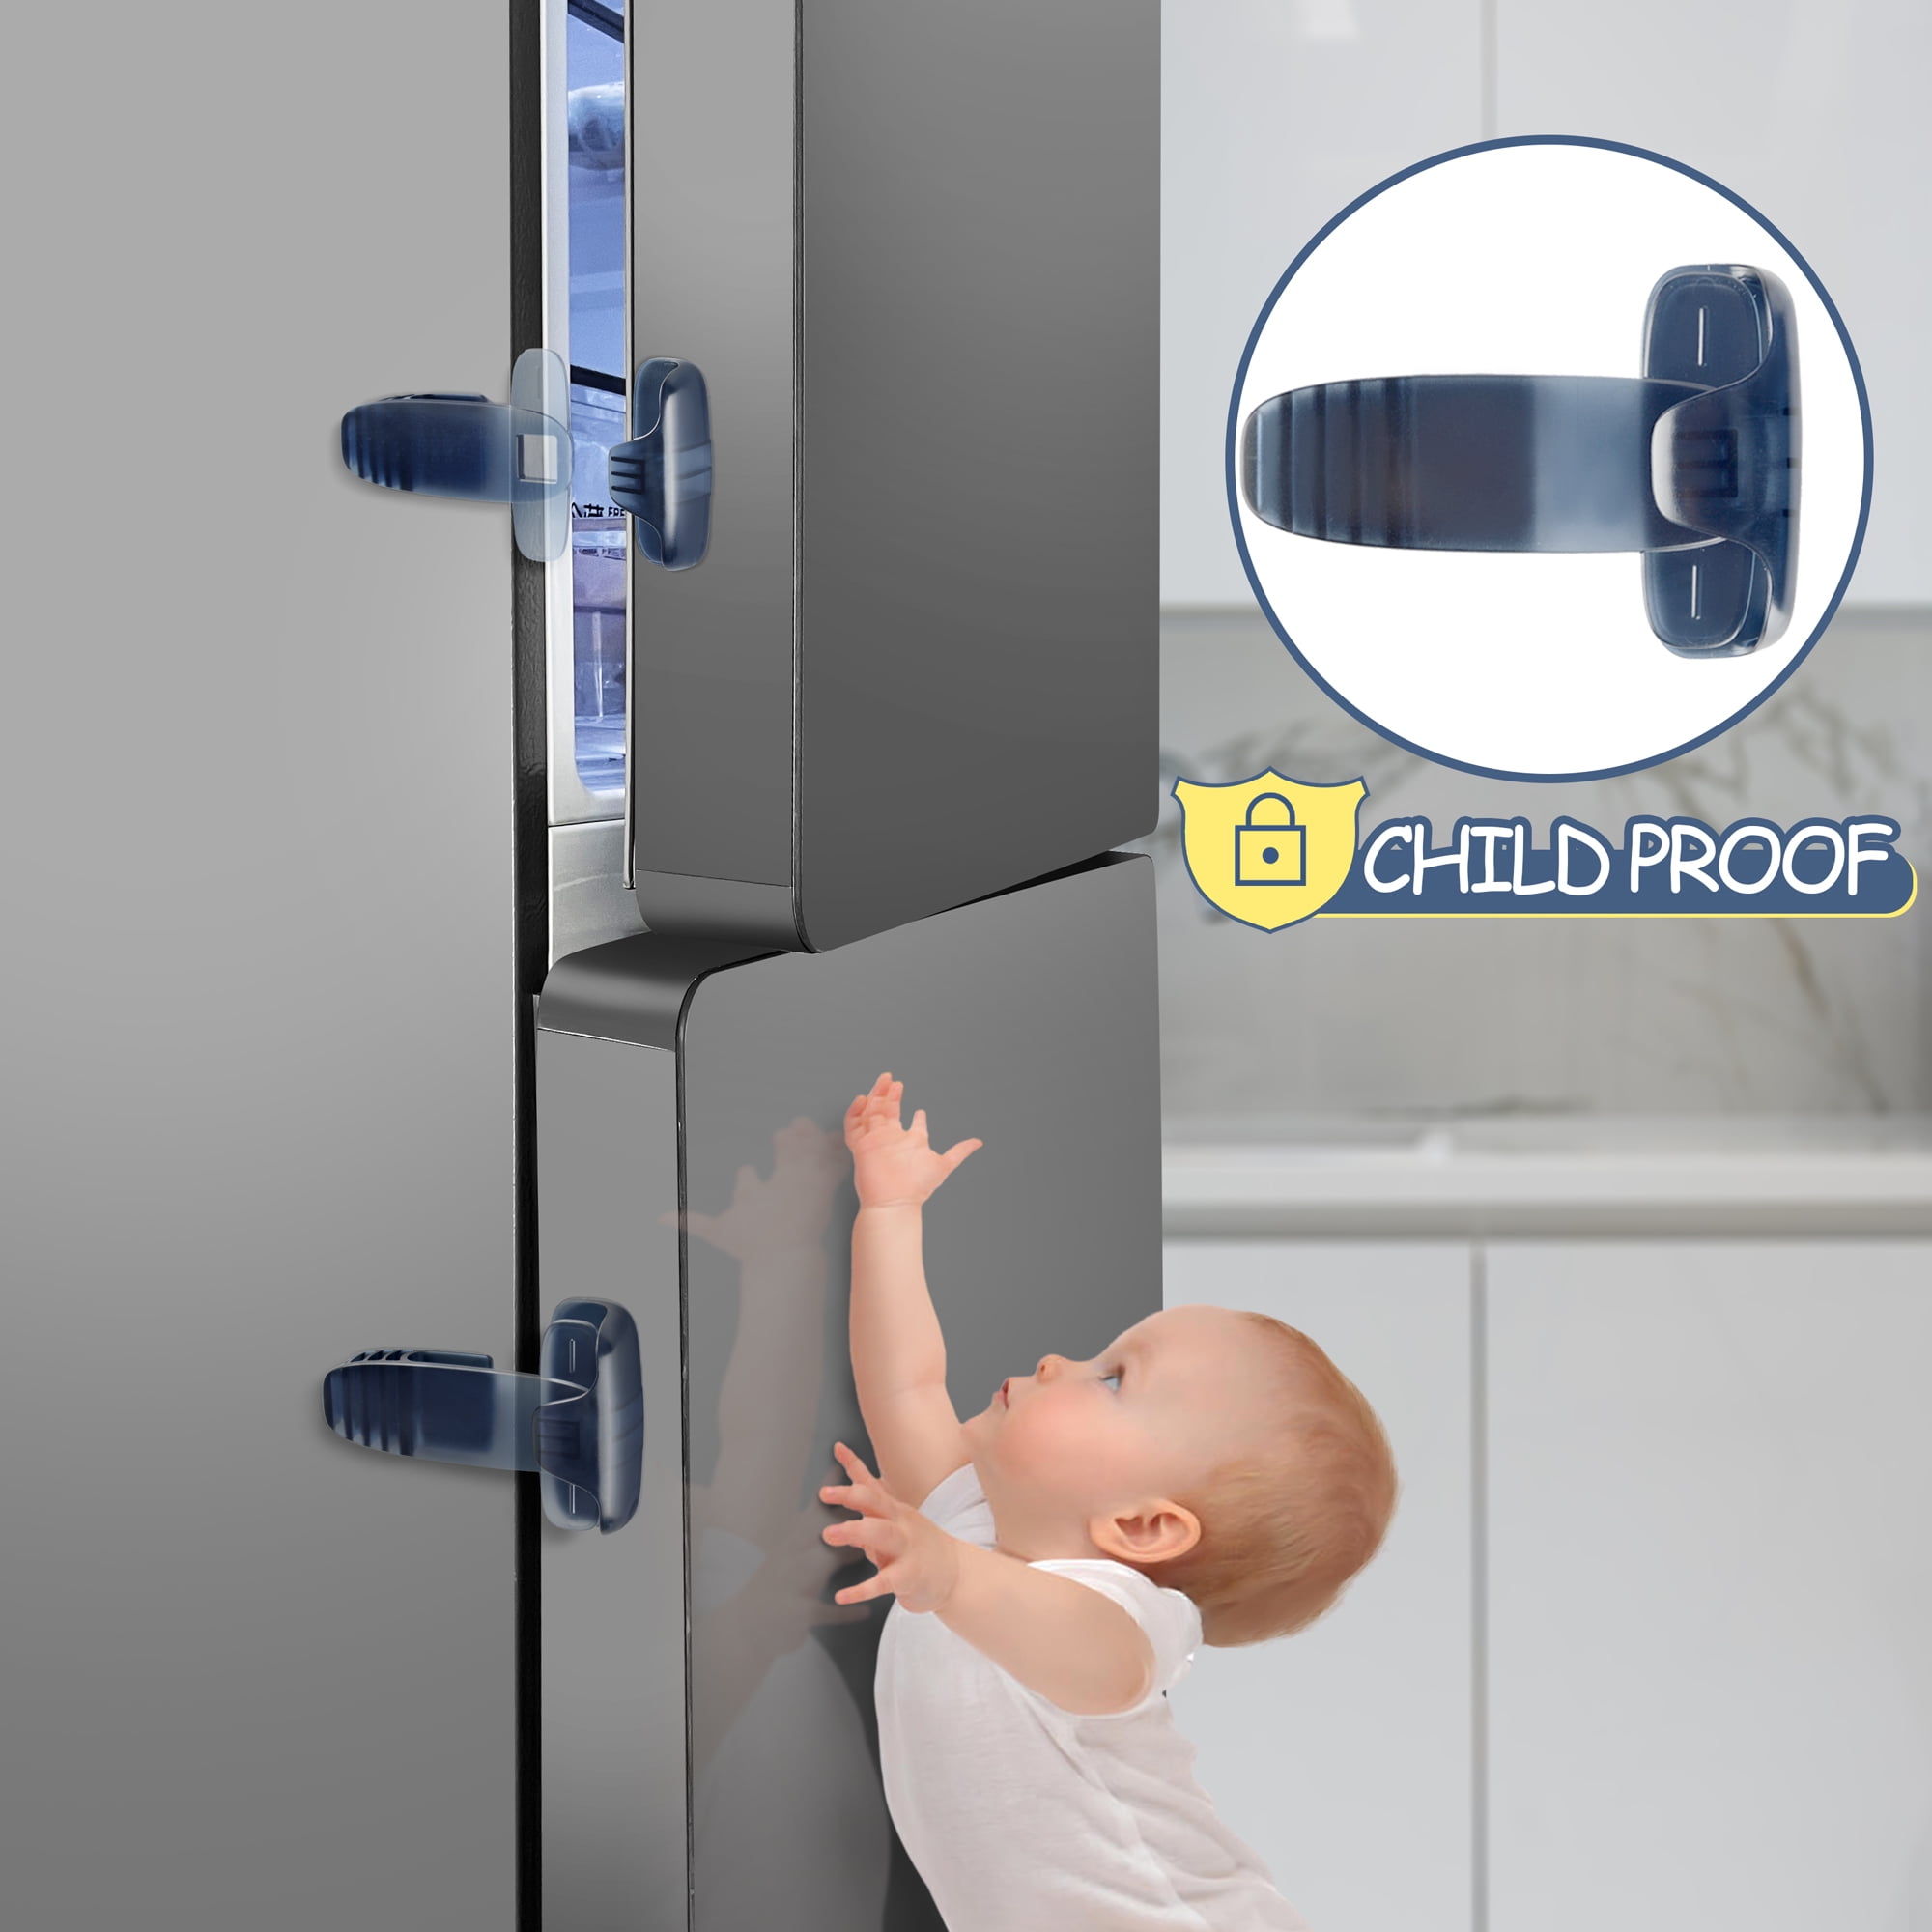 Divyata Mall fridge locks child proof